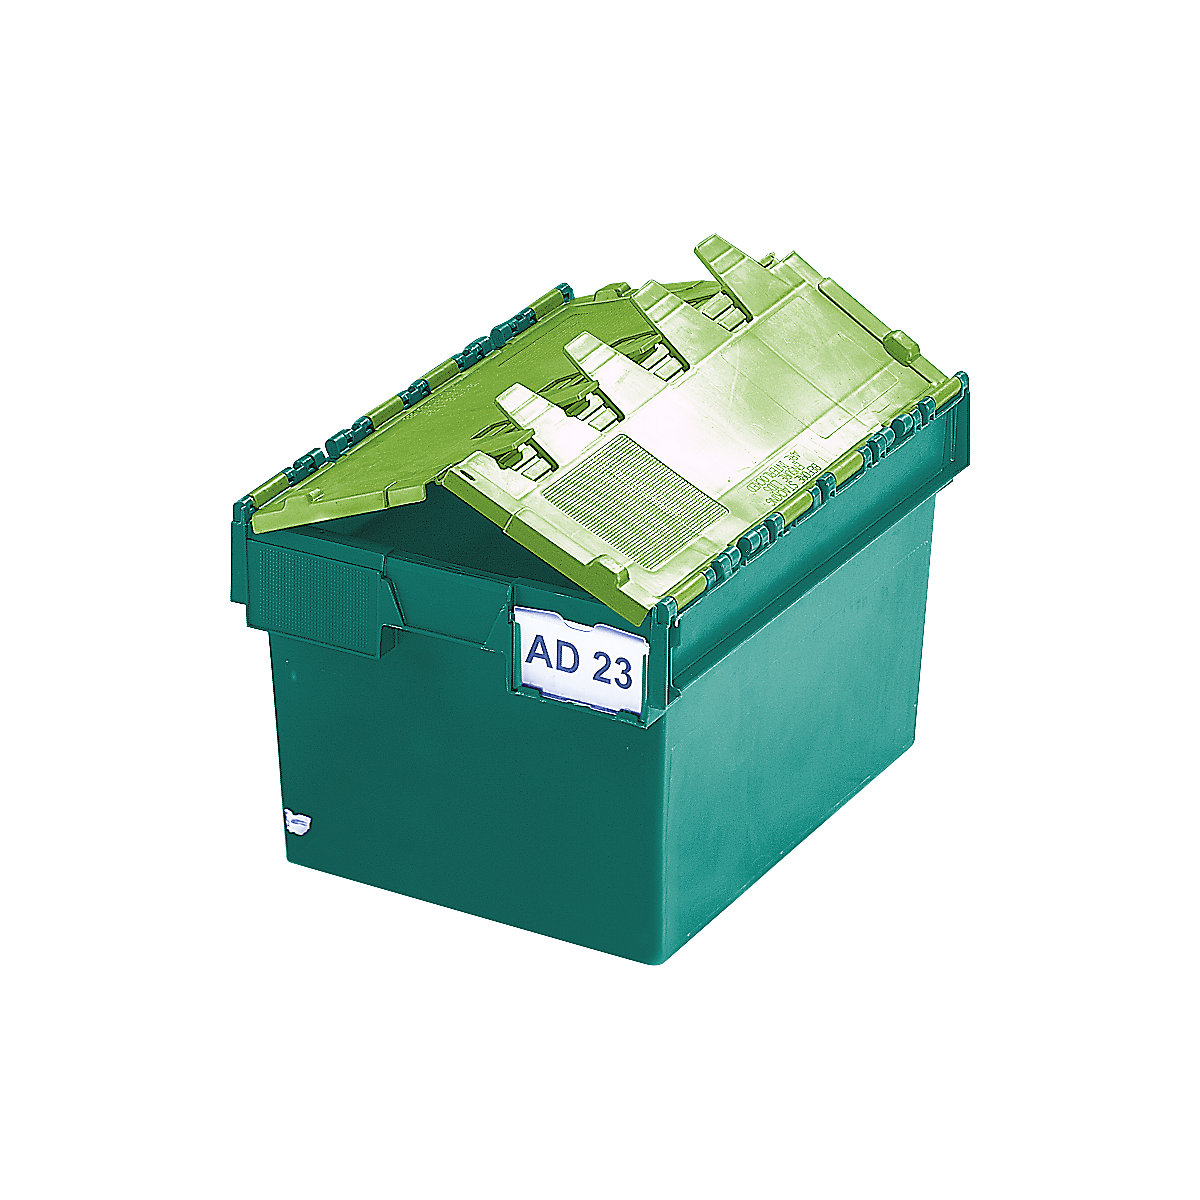 Mehrweg-Stapelbehälter KAIMAN, Inhalt 54 Liter, LxBxH 600 x 400 x 320 mm, grün, ab 10 Stück